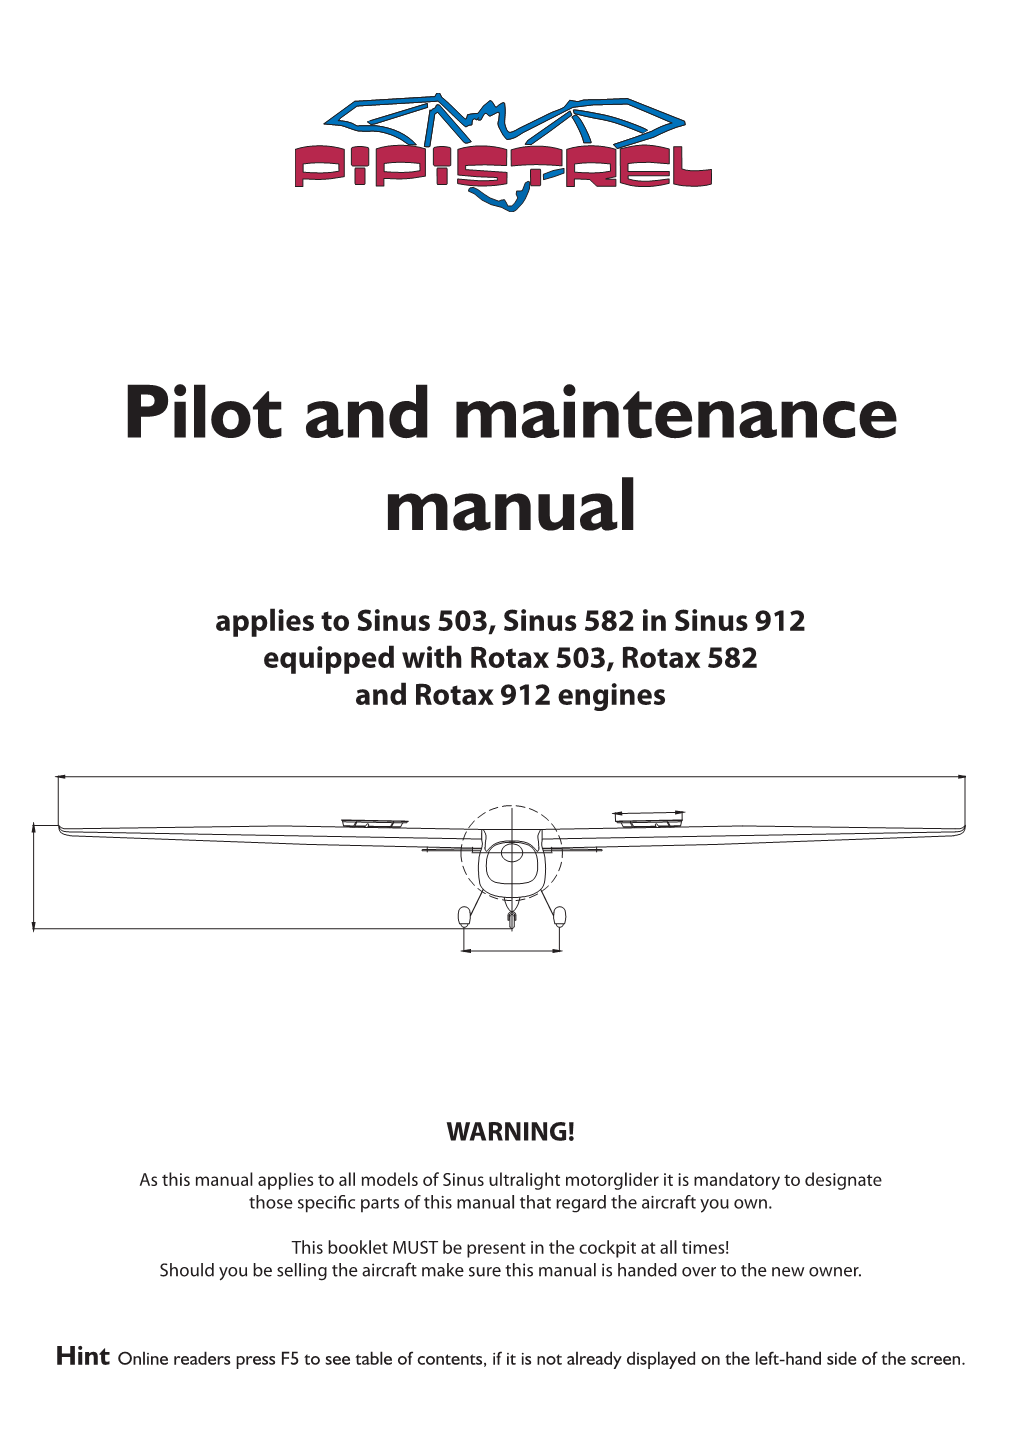 Pilot and Maintenance Manual